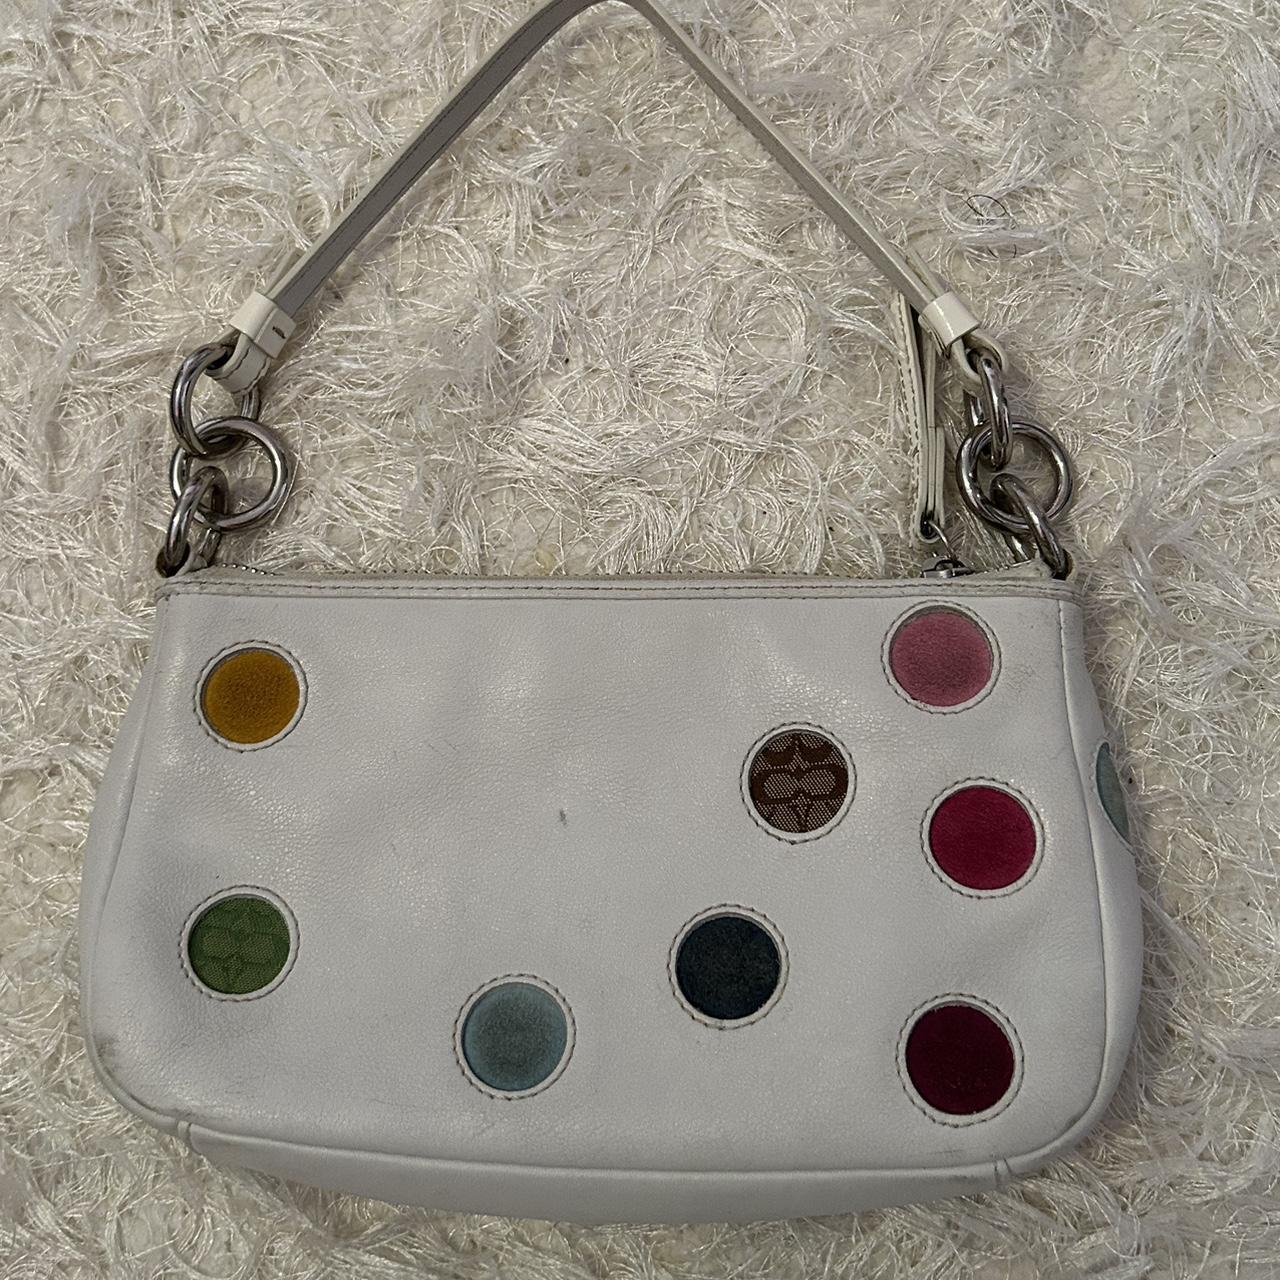 coach mini demi pouchette bag 💗🤍 very rare color - Depop